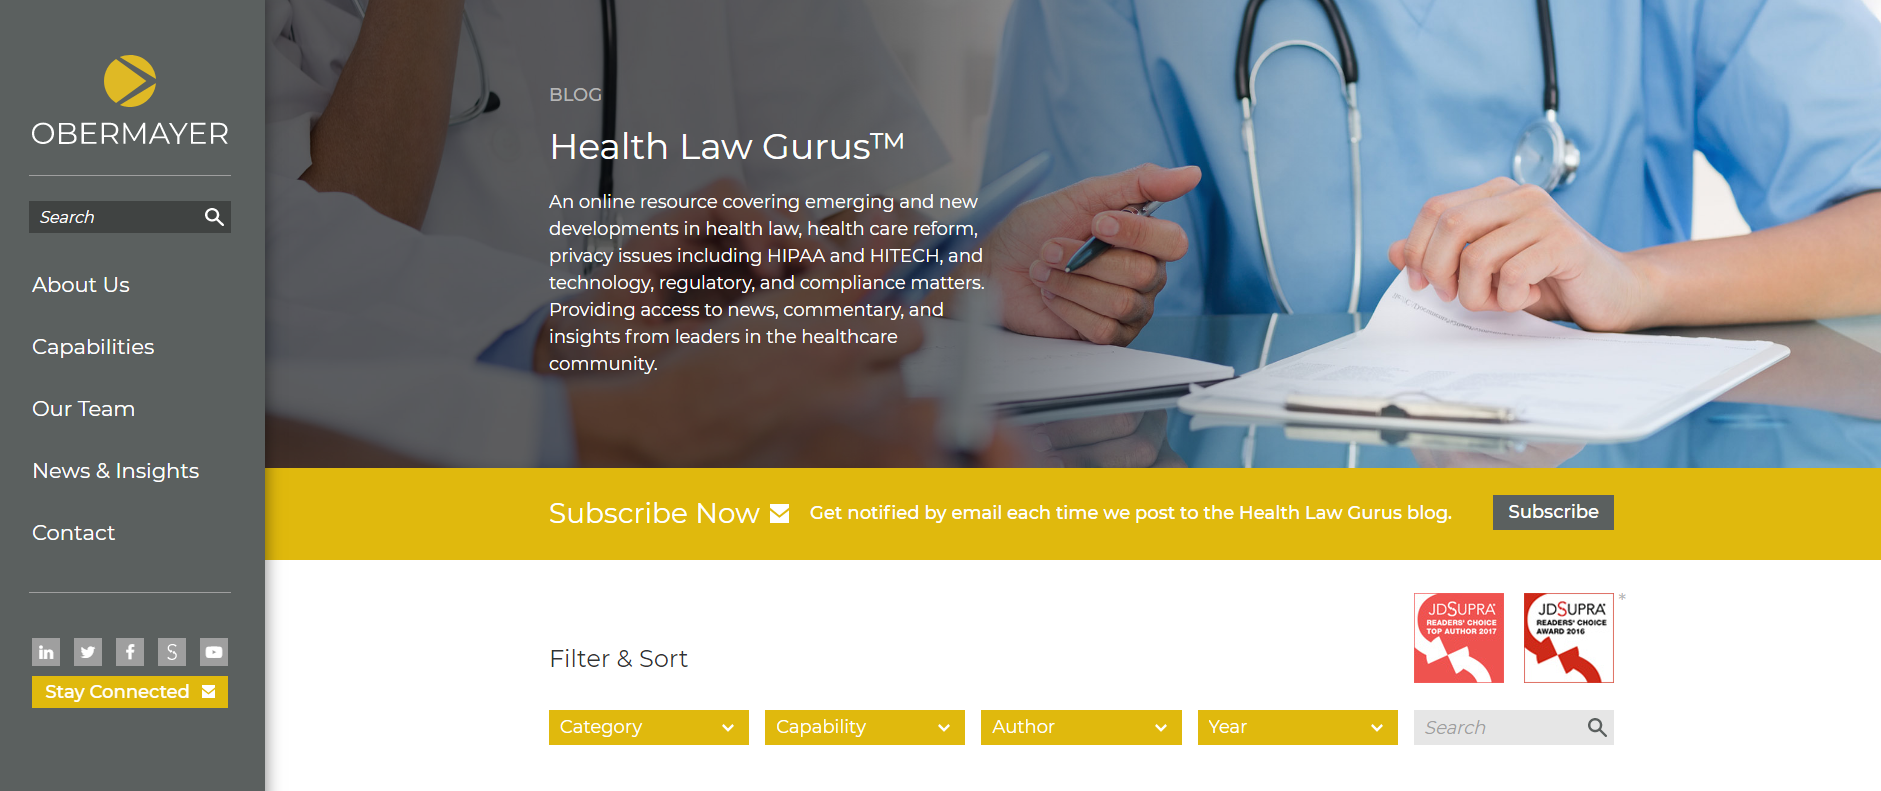 Health Law Gurus